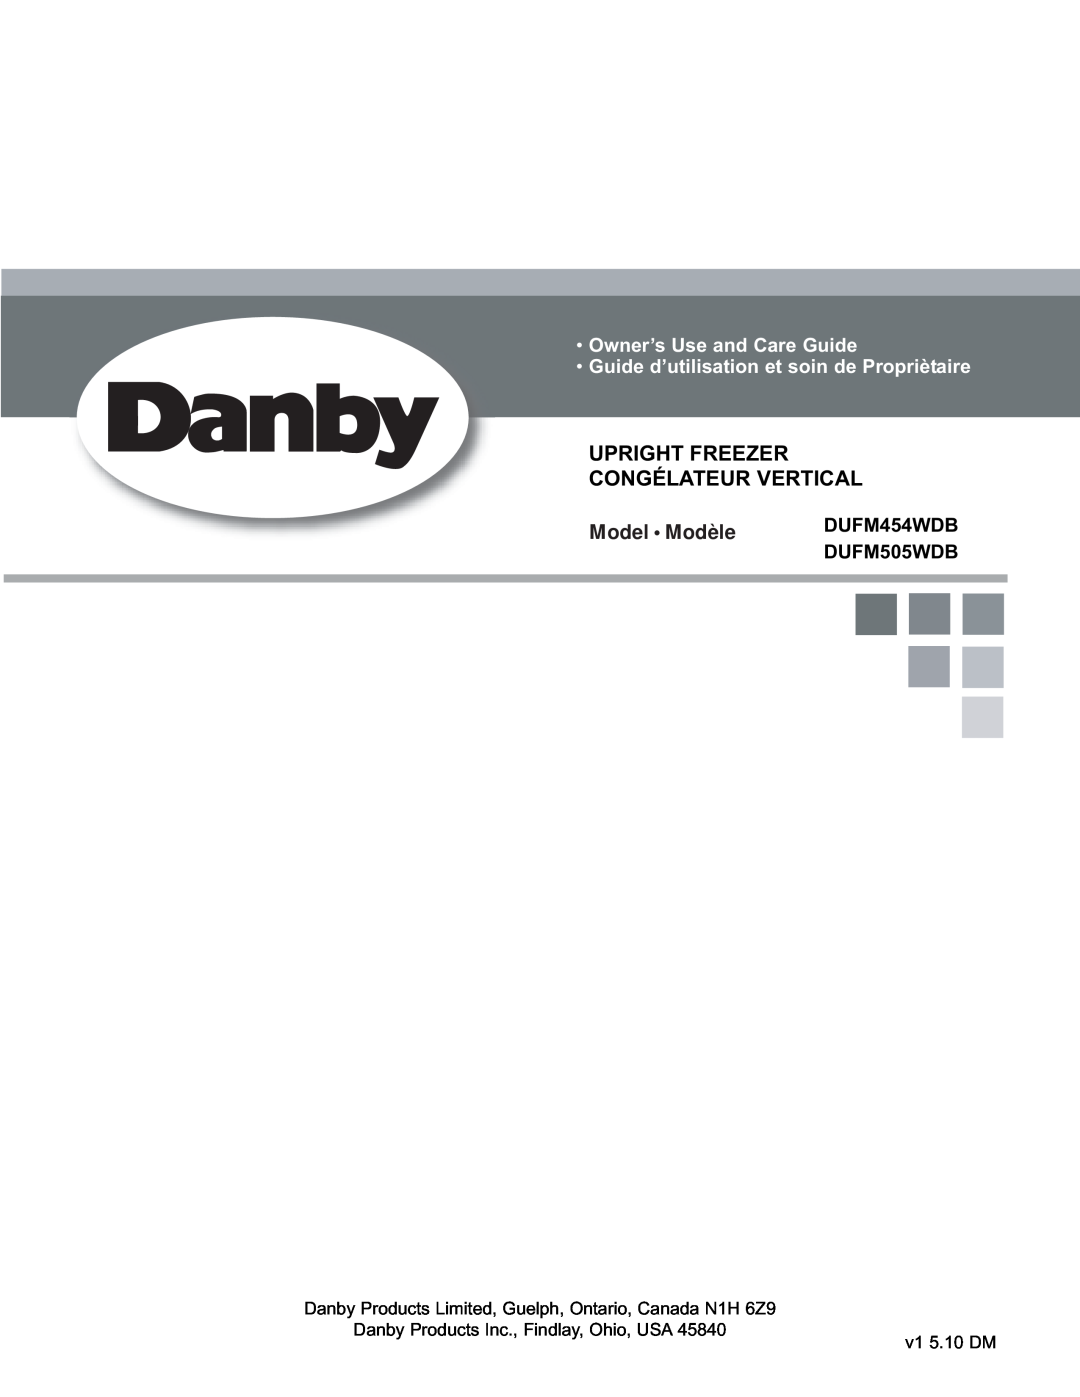 Danby manual Upright Freezer Congélateur Vertical, Model Modèle ModeloDUFM454WDB, Owner’s Use and Care Guide 